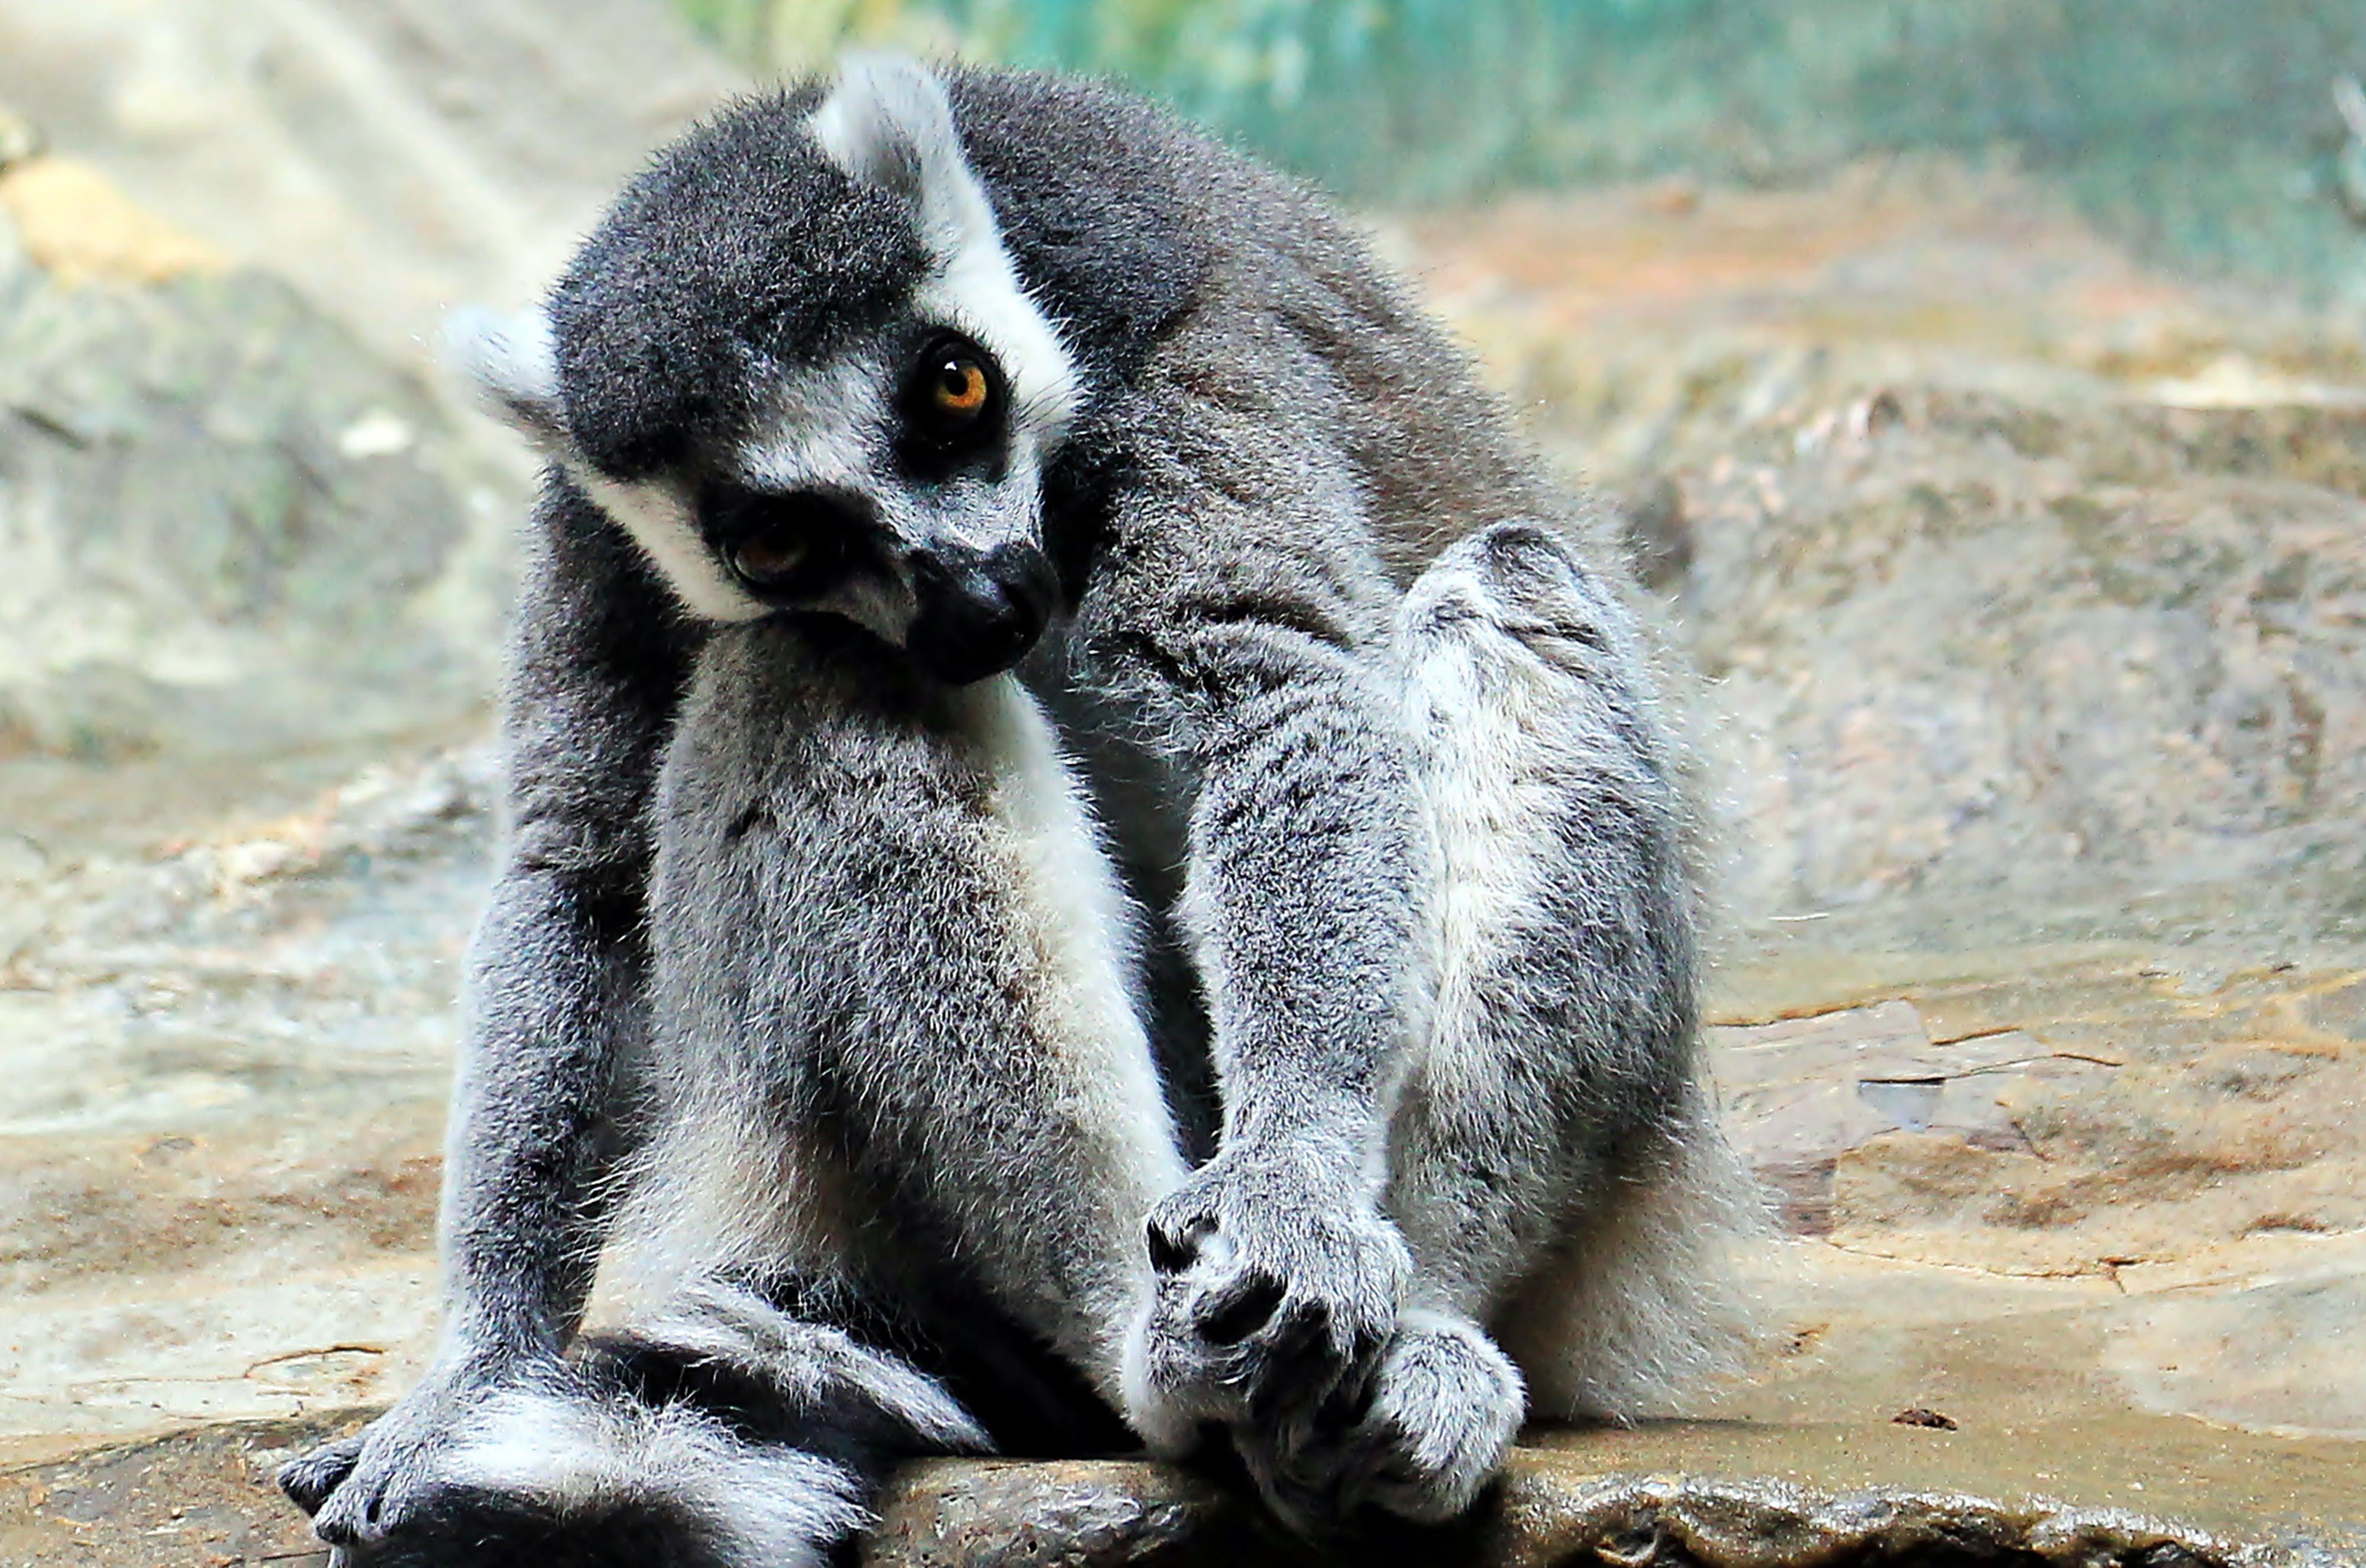 grey primate sitting on rock, monkey, zoo, animal world, thoughtful